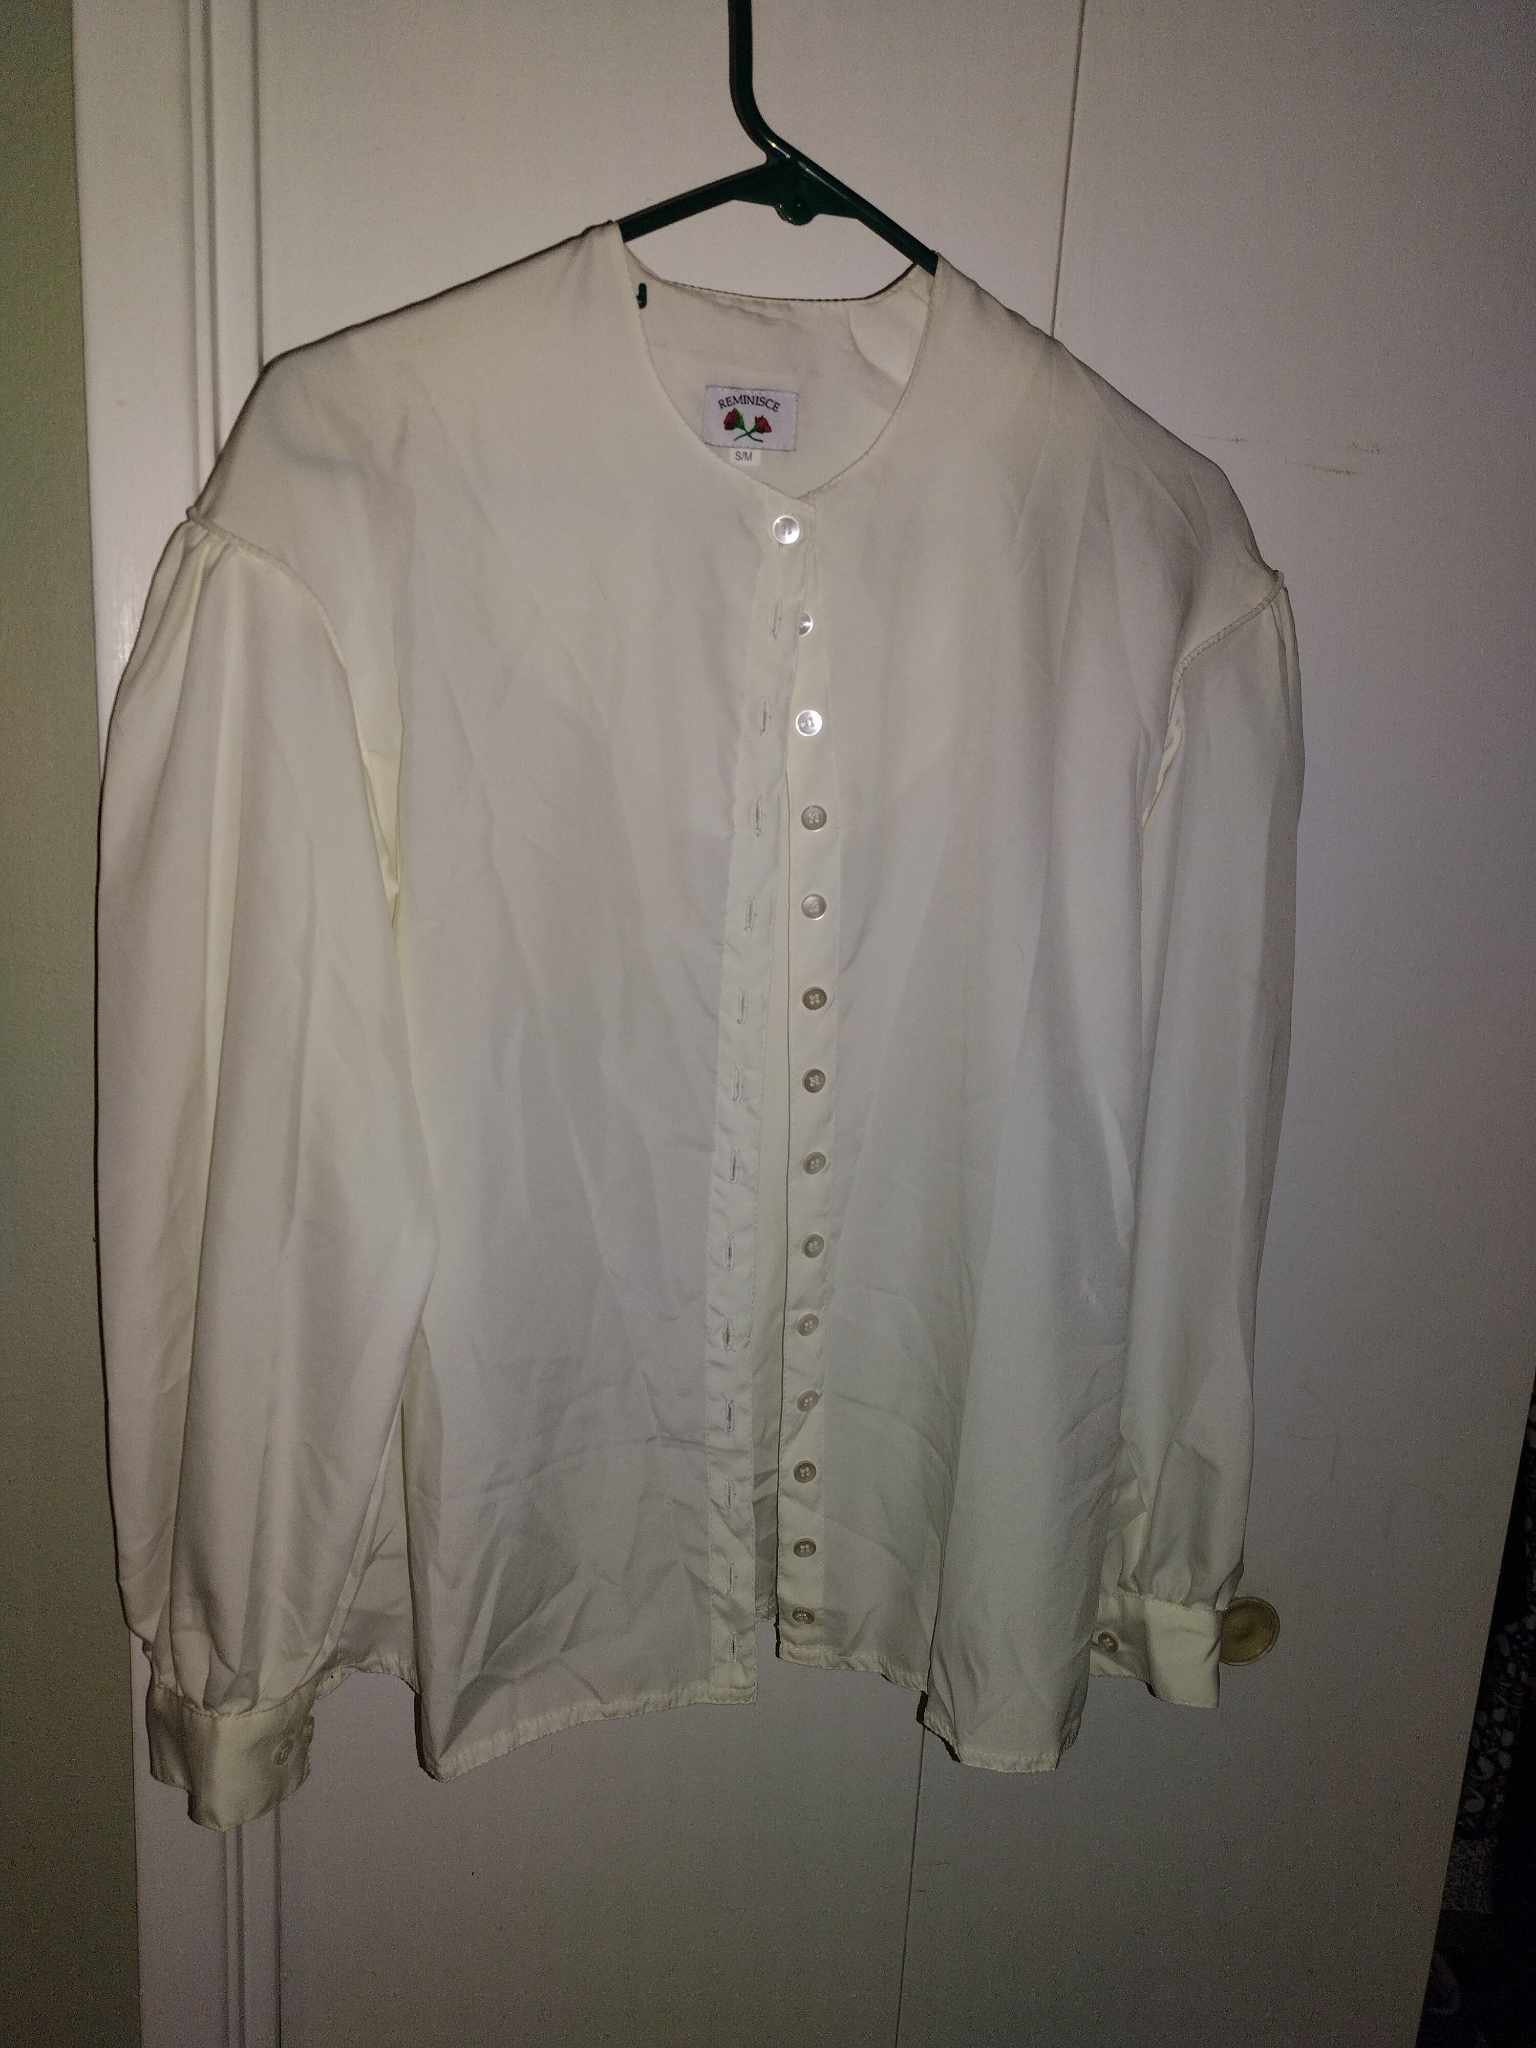 Camisa CHLS2003-White Western Wear,  